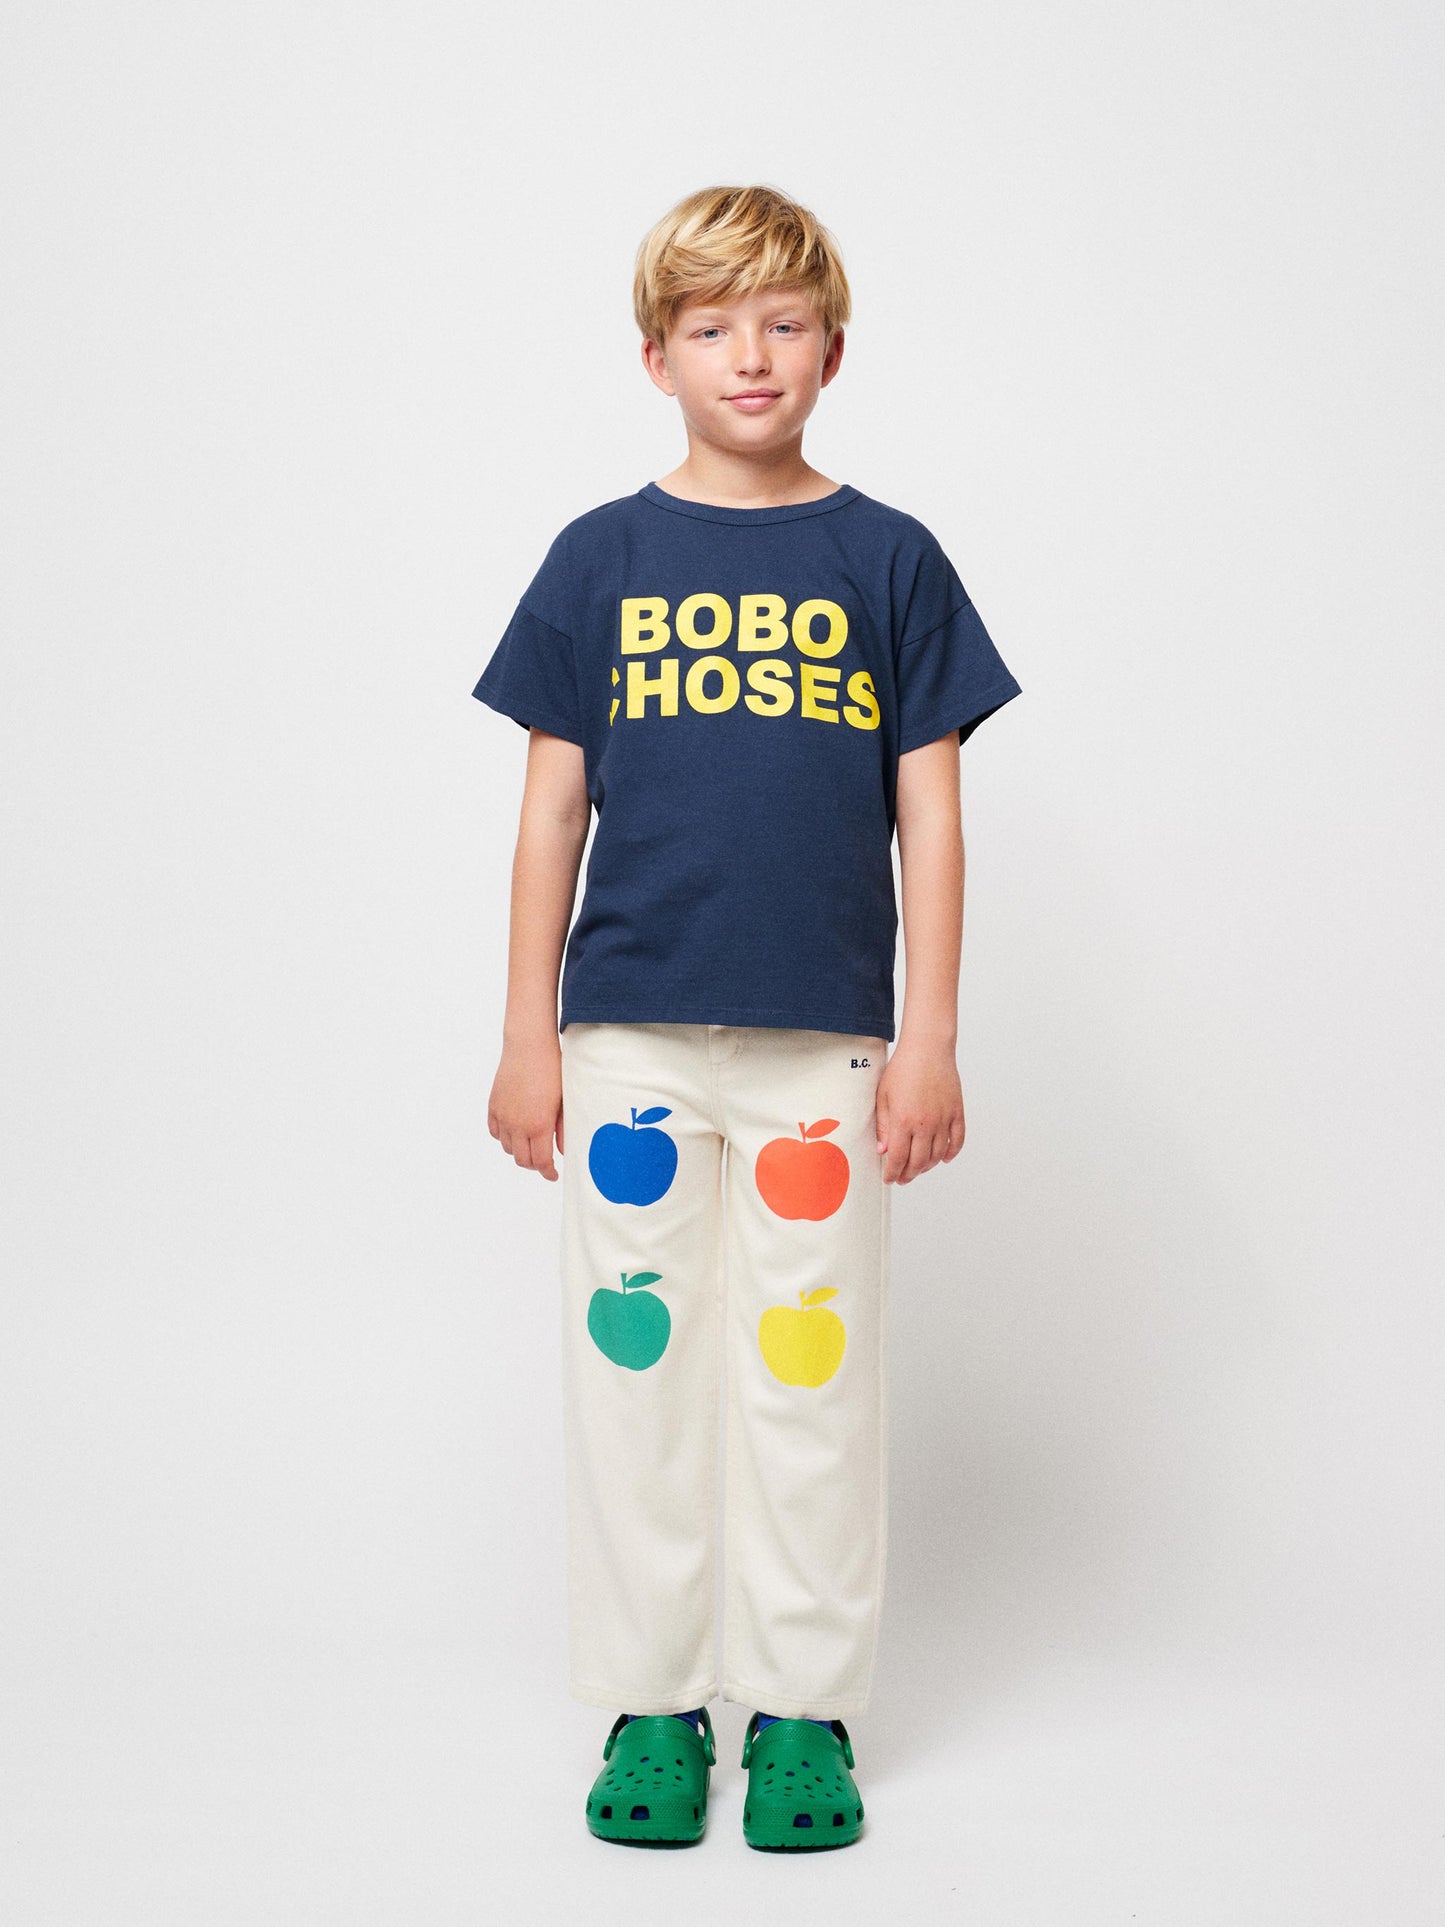 Bobo Choses navy T-shirt